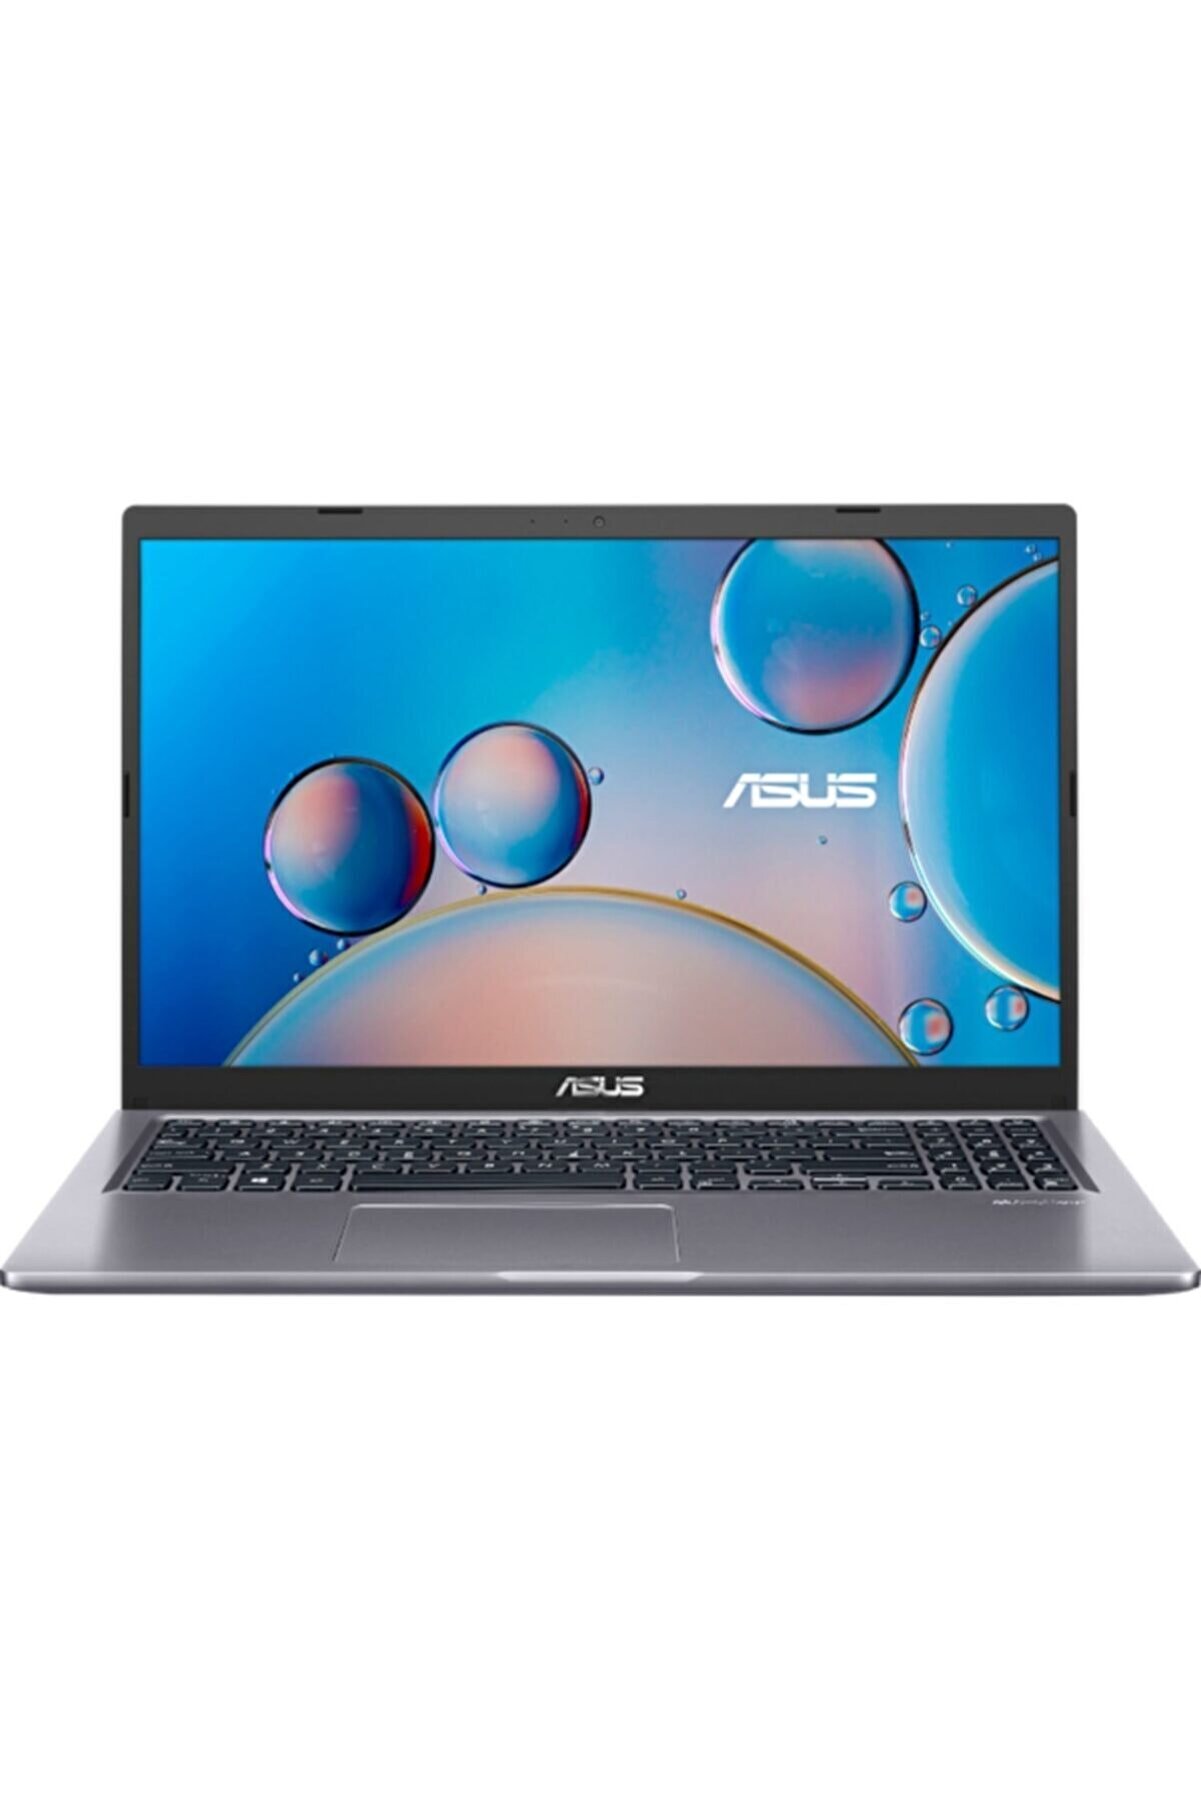 ASUS Laptop D515da Br028t Amd Ryzen3 3250u 4gb Ram 256gb Ssd 15.6" W10 Notebook